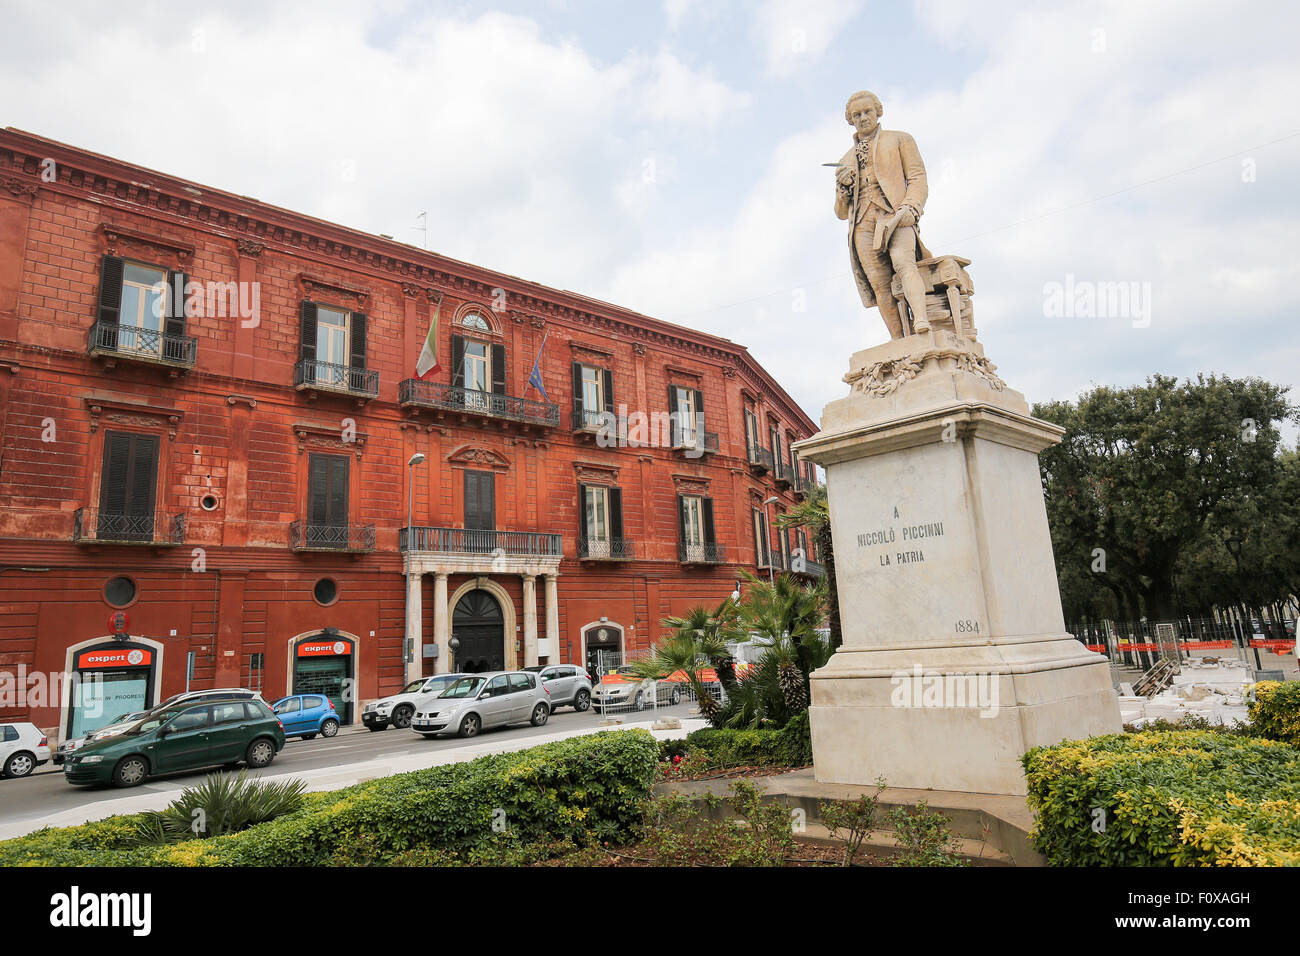 BARI, ITALIE - 16 mars 2015 : Statue de la 18e siècle compositeur italien Niccolo Piccinni au Teatro Piccinni à Bari, Italie Banque D'Images